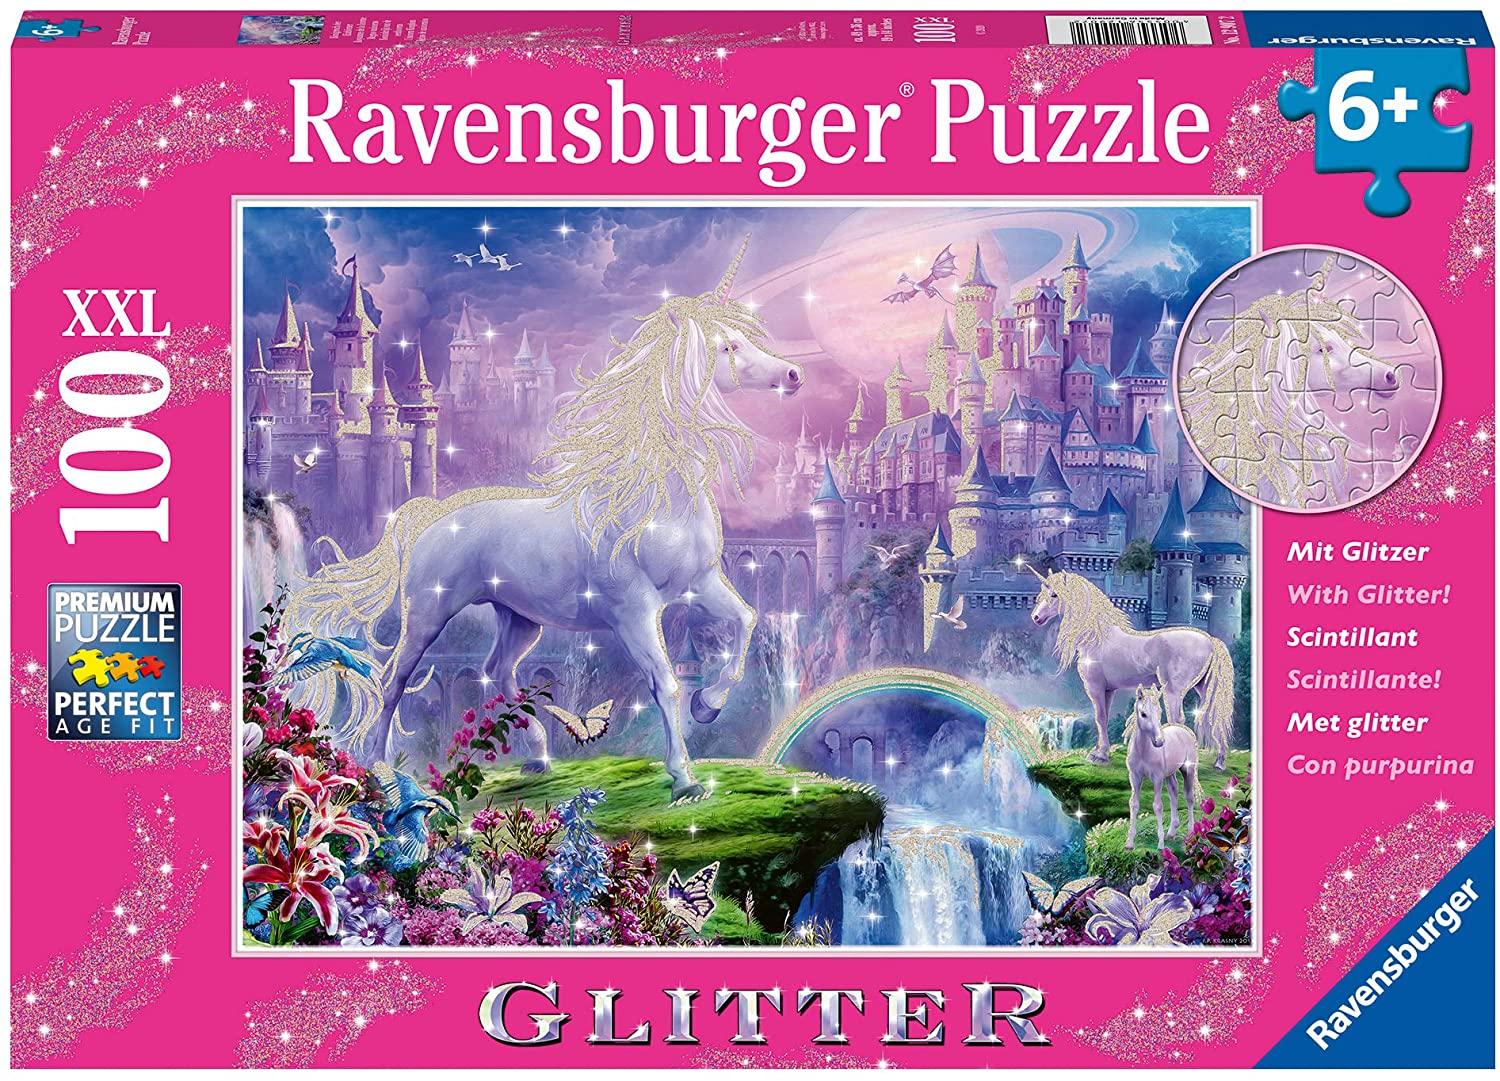 Ravensburger 12907 Unicorn Kingdom 100 Piece Glitter Jigsaw Puzzle for $6.99